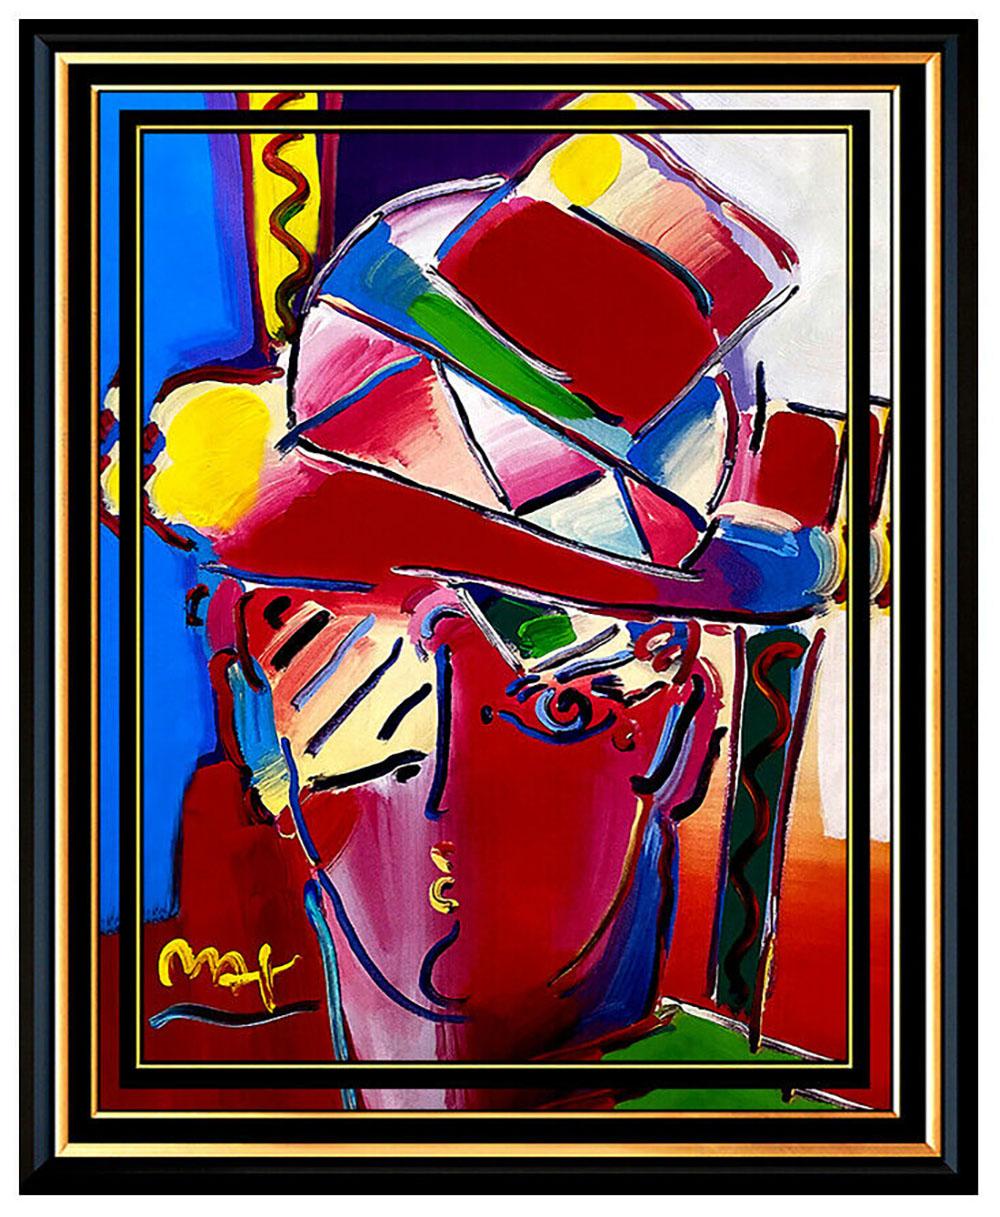 Peter Max Portrait Painting - PETER MAX Original Signed PAINTING ZERO PRISM Pop ART Acrylic Oil Iconic MAN